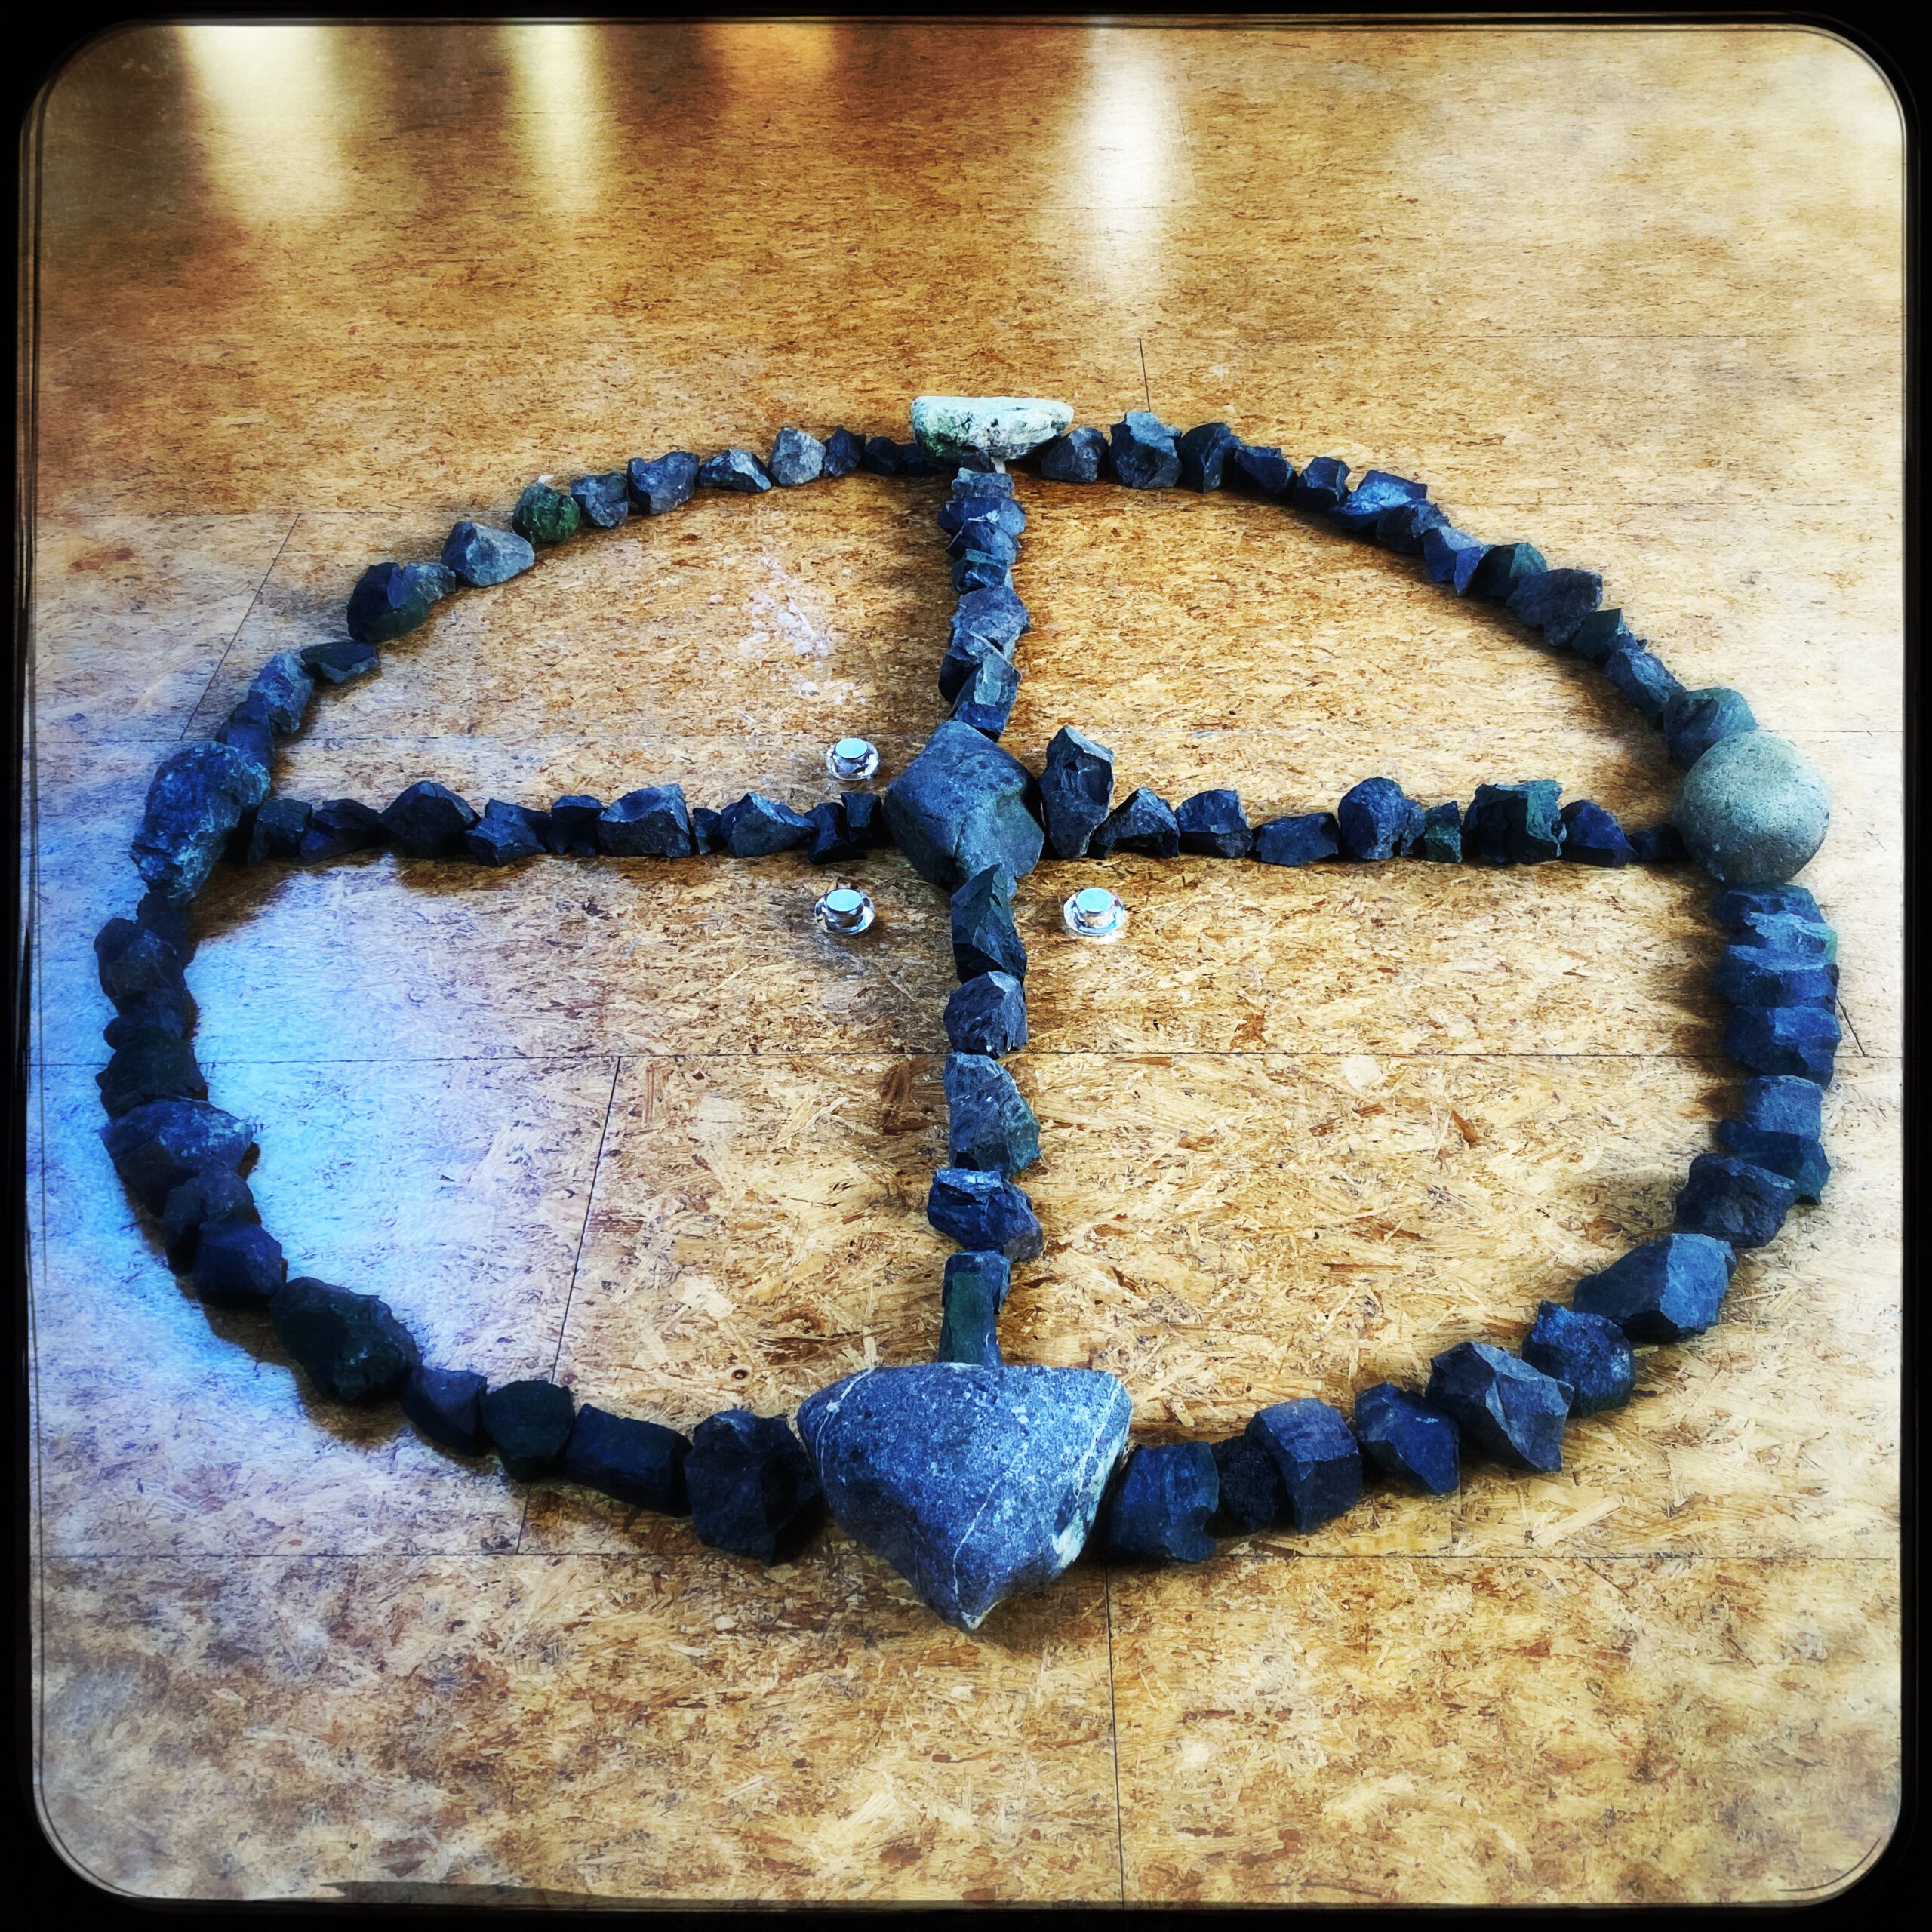 medicijnwiel-medicine-wheel-sjamanisme-shamanism-shaman-four-directions-east-south-west-north-oosten-zuiden-westen-noorden-cirkel-circle-your-healing-story-bernadetta-renhungan-blog